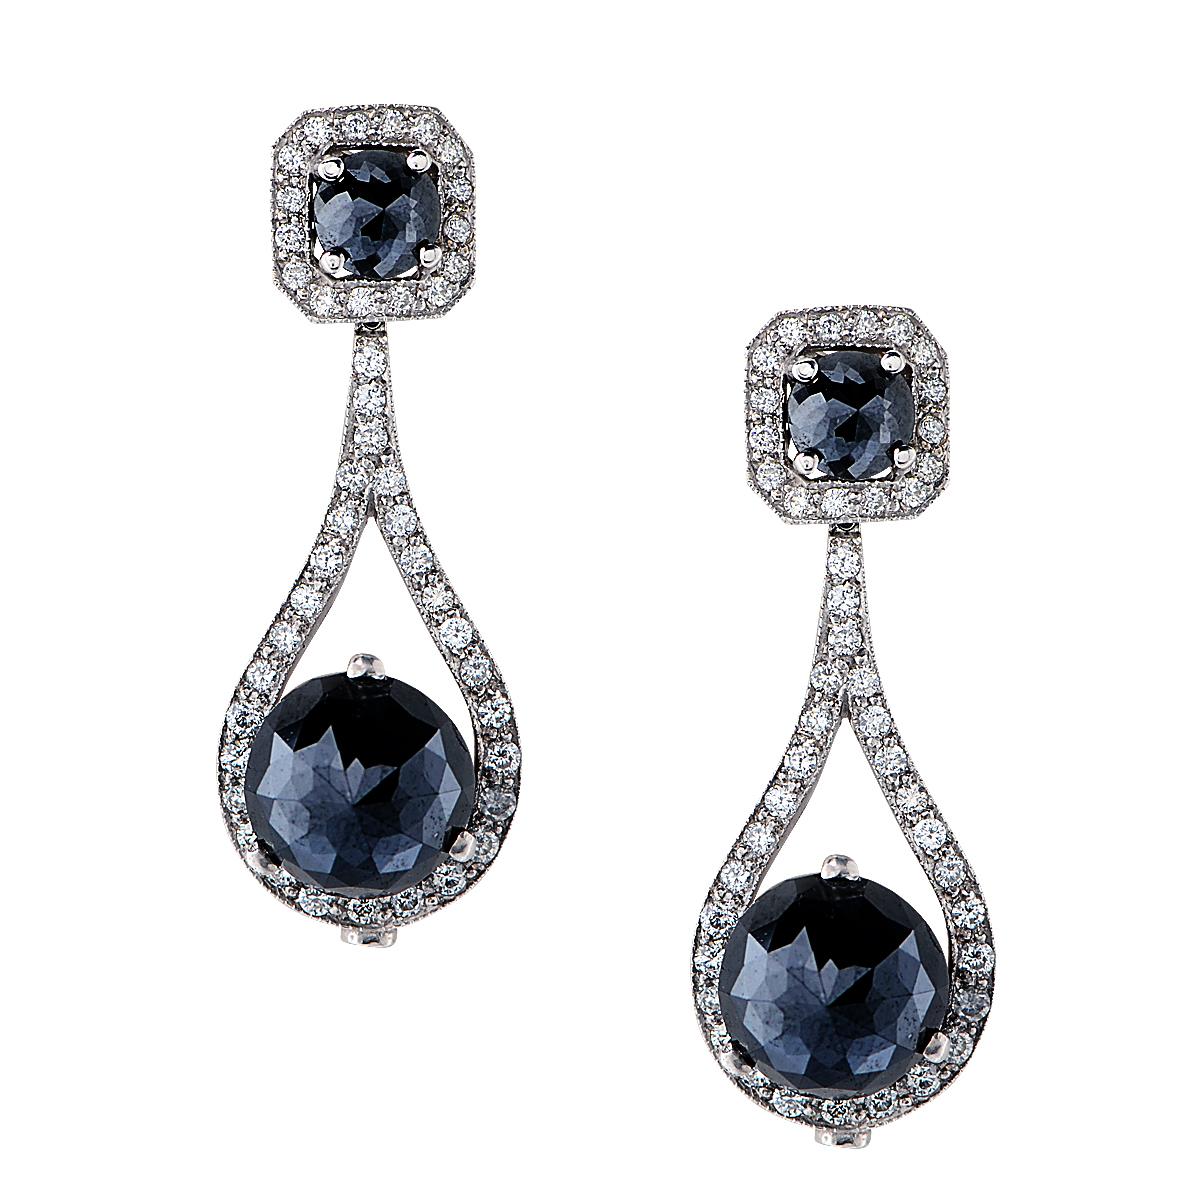 Brilliant Cut 26.74 Carat Black Diamond Earrings For Sale